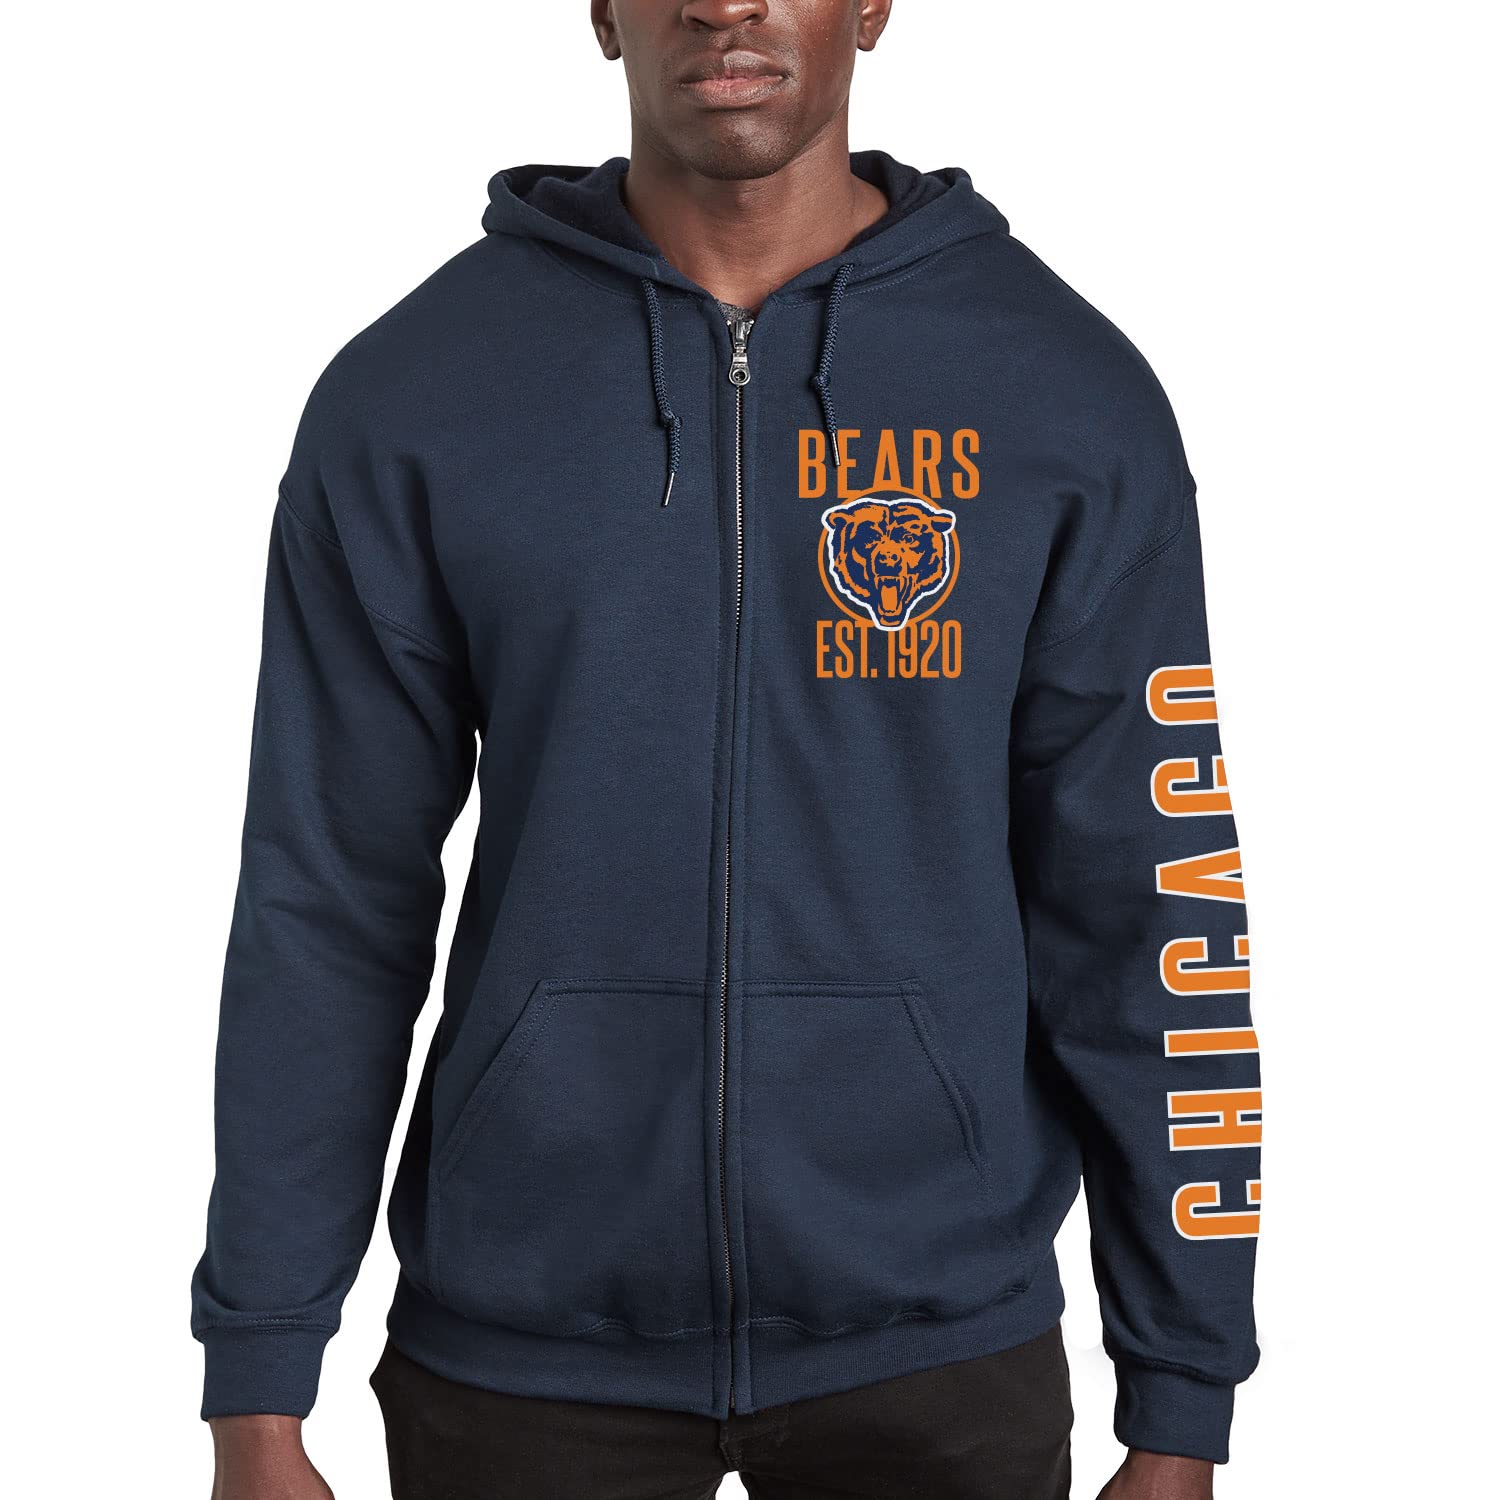 Junk Food clothing x NFL - chicago Bears - MVP Zip Hoodie - Adult Unisex Full Zip Hooded Fleece Sweatshirt - Size Medium